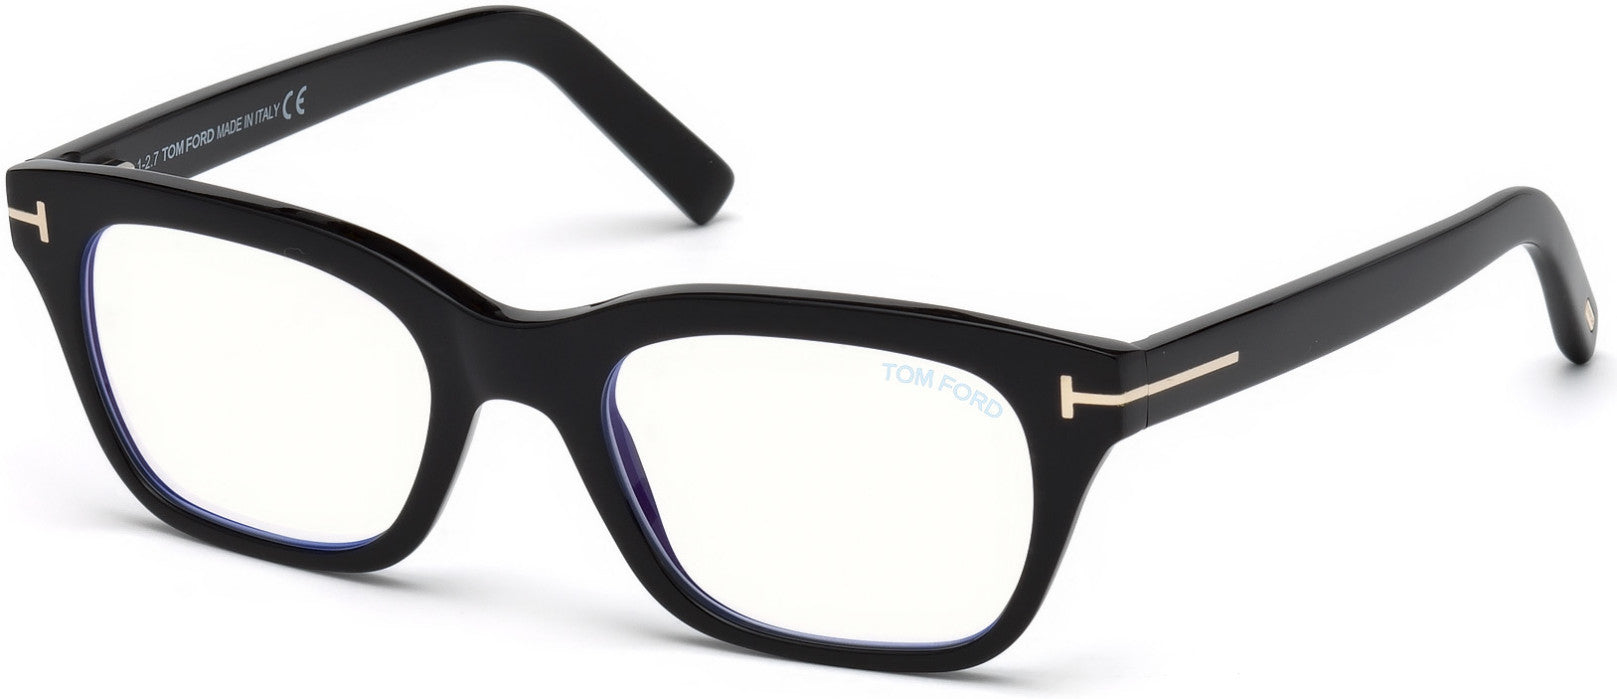 Tom Ford FT5536-B Geometric Eyeglasses 001-001 - Shiny Black/ Blue Block Lenses